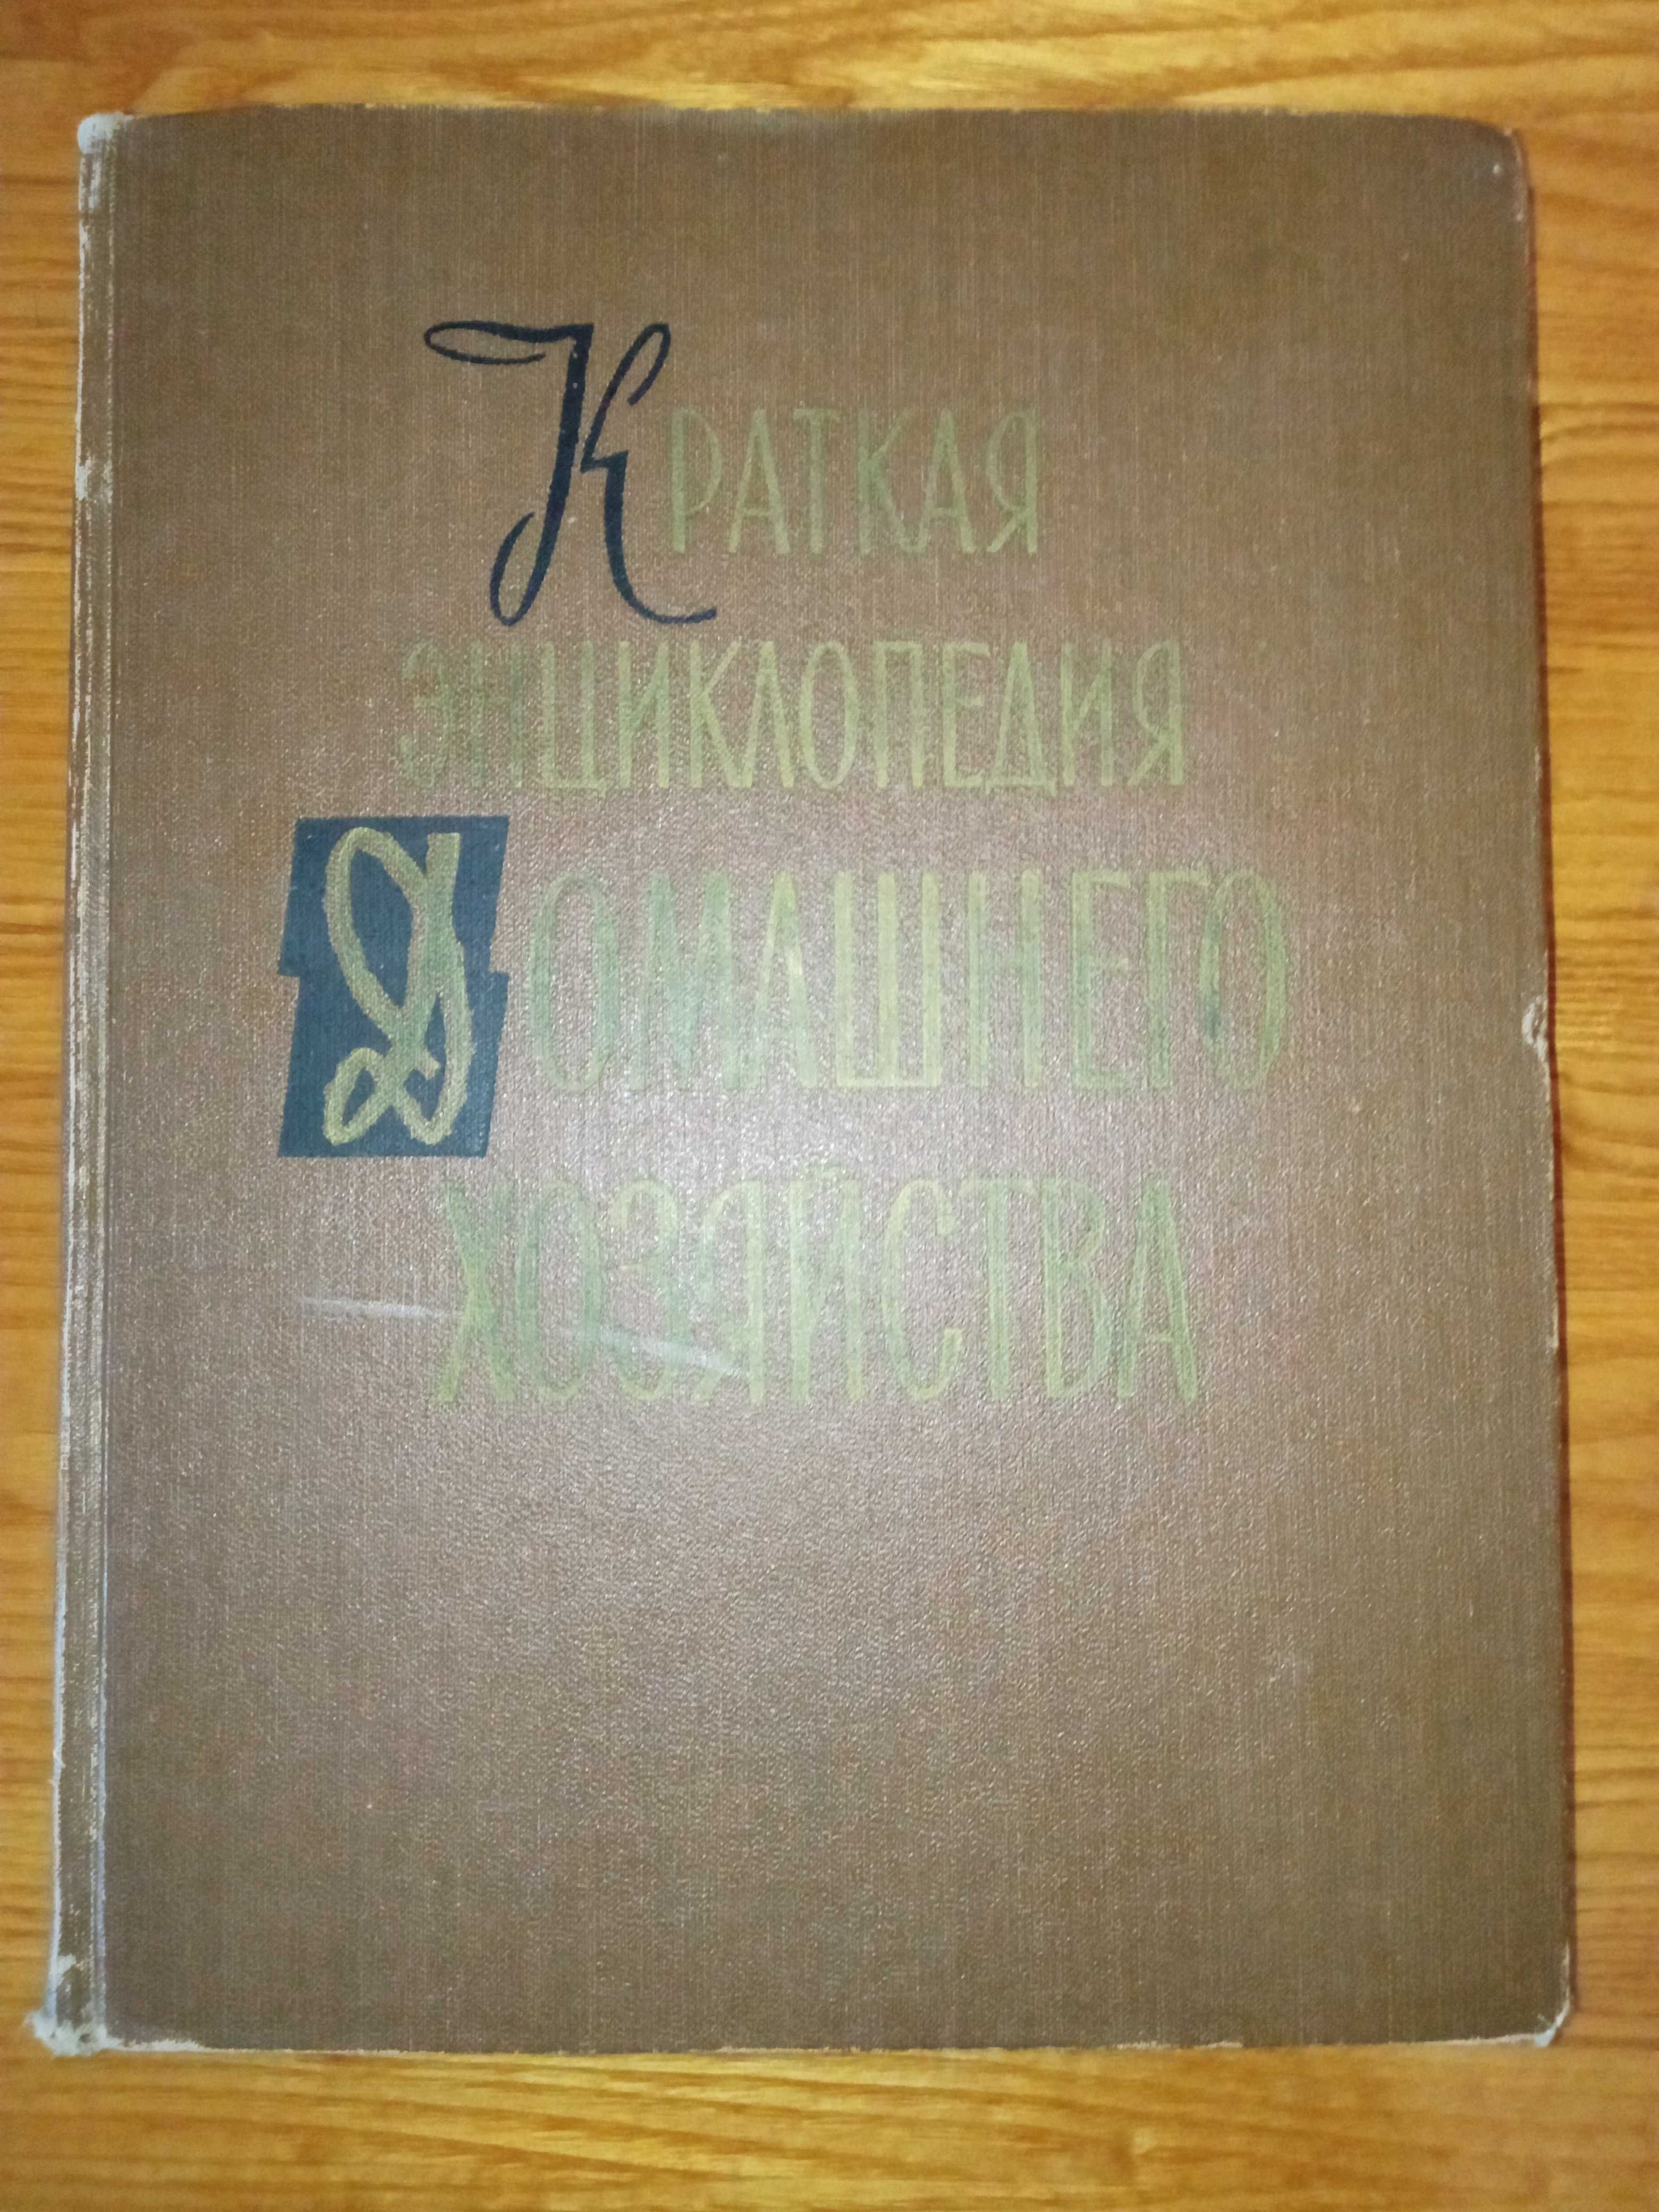 Книга ""Краткая энциклопедия домашнего хозяйства"" 1959г.